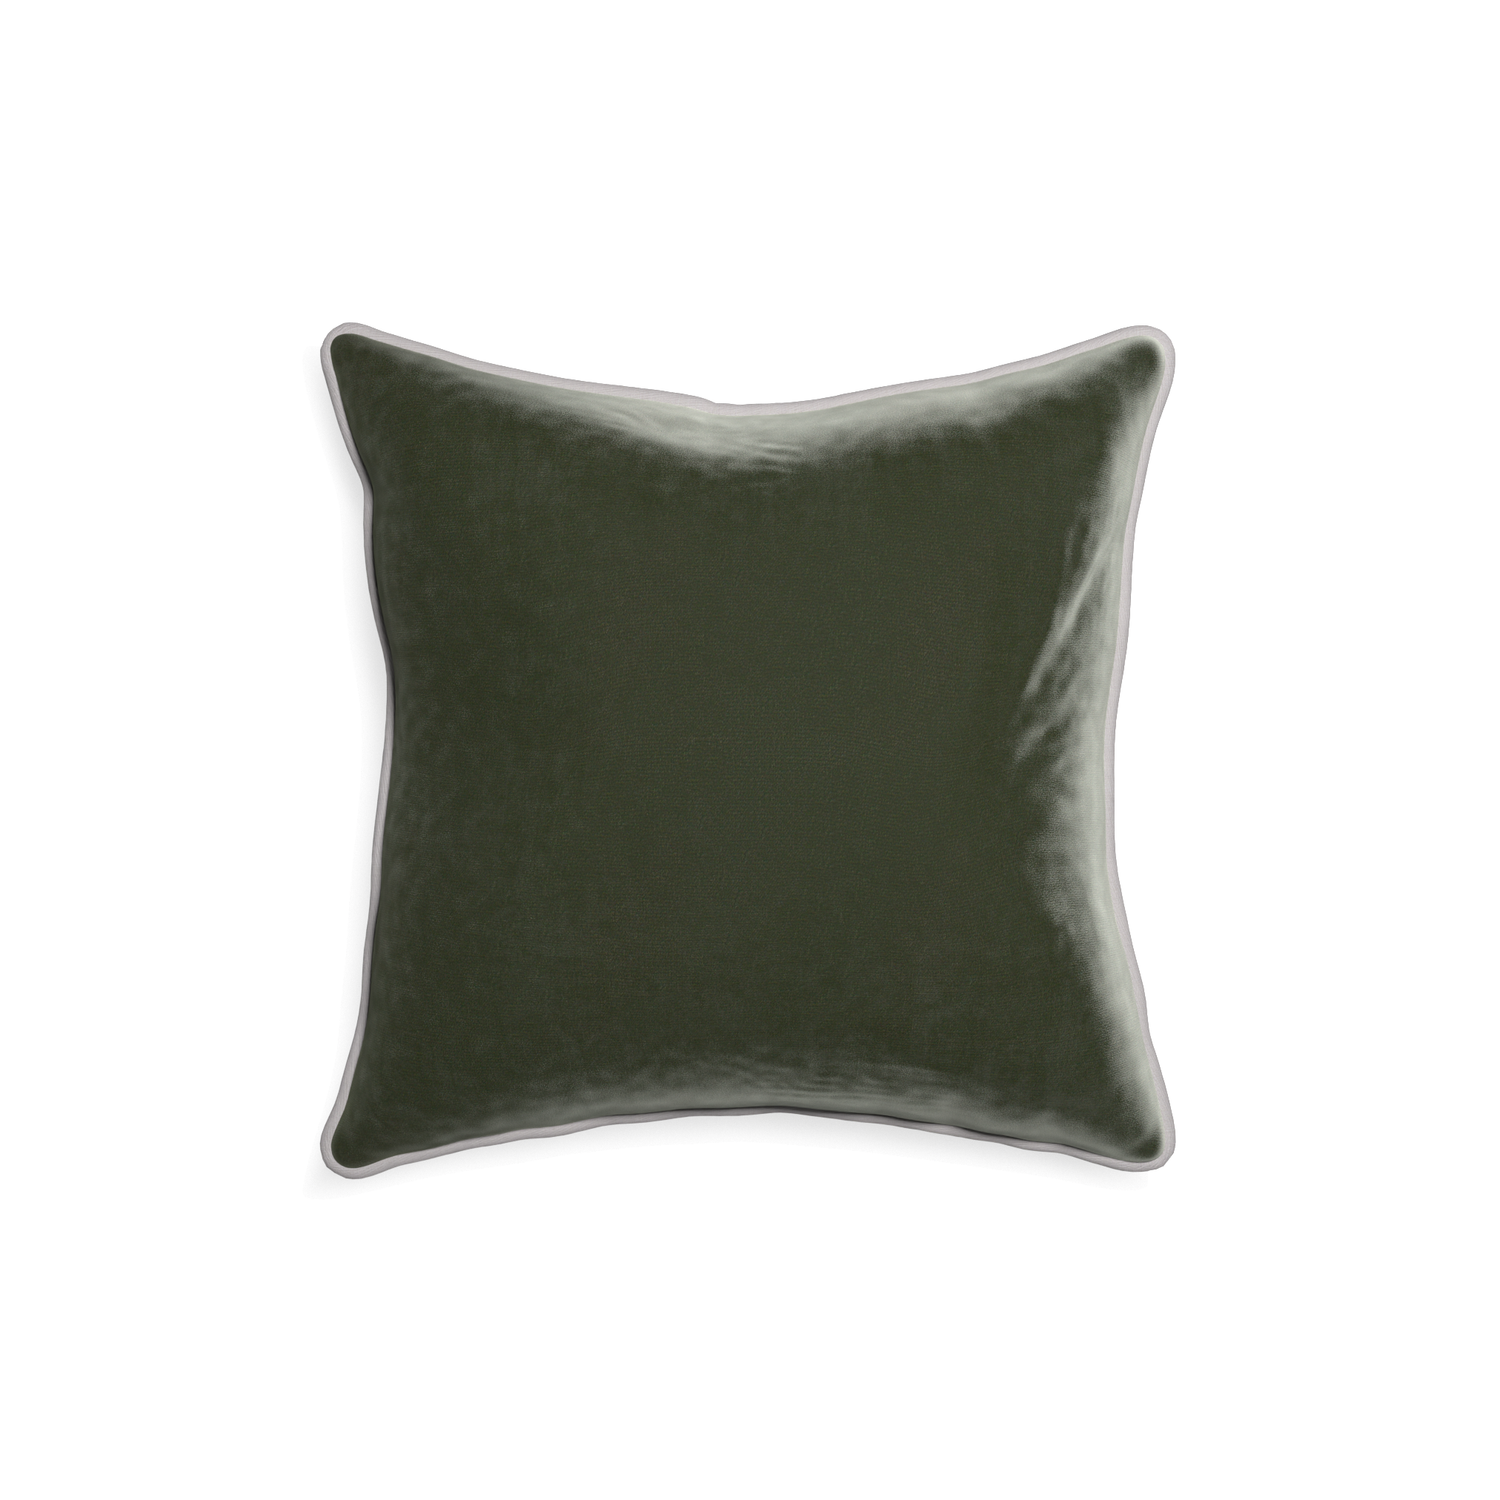 18-square fern velvet custom pillow with pebble piping on white background